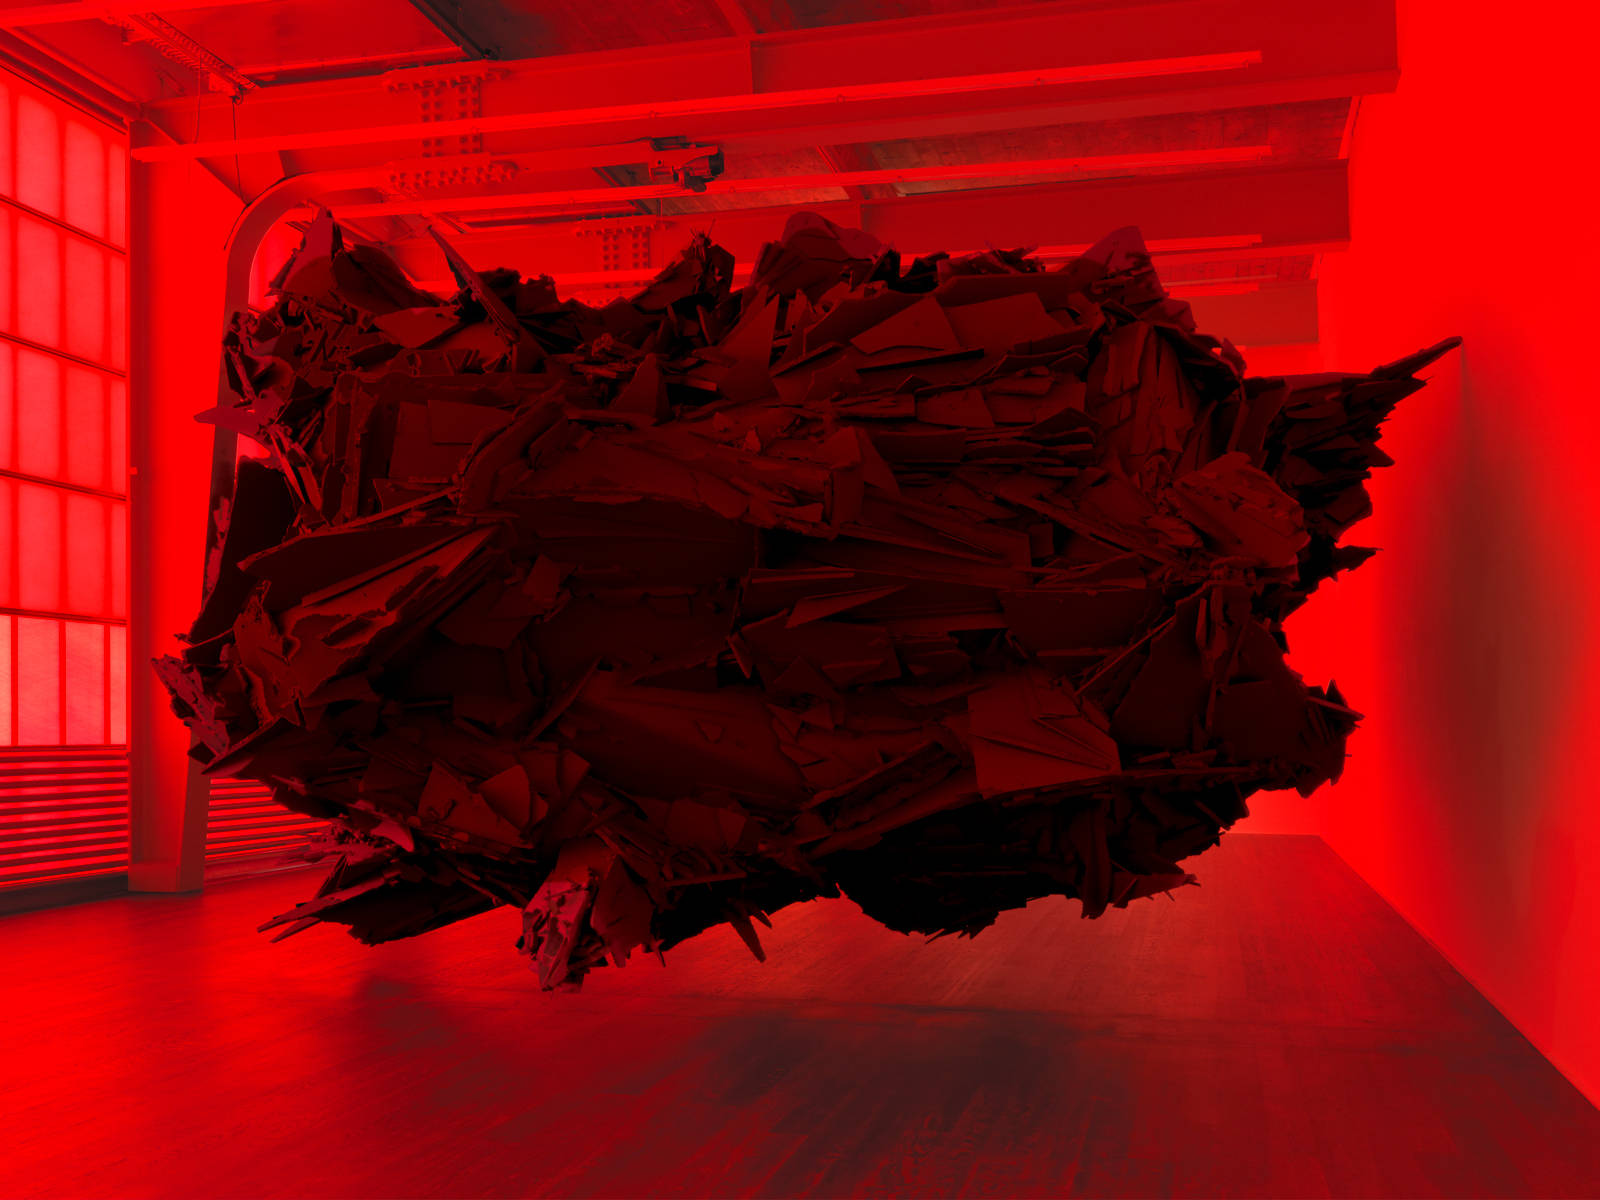 Martin Eder / "The Collective Unconcious", exhibition view, Hauser & Wirth, Zürich  / 2013